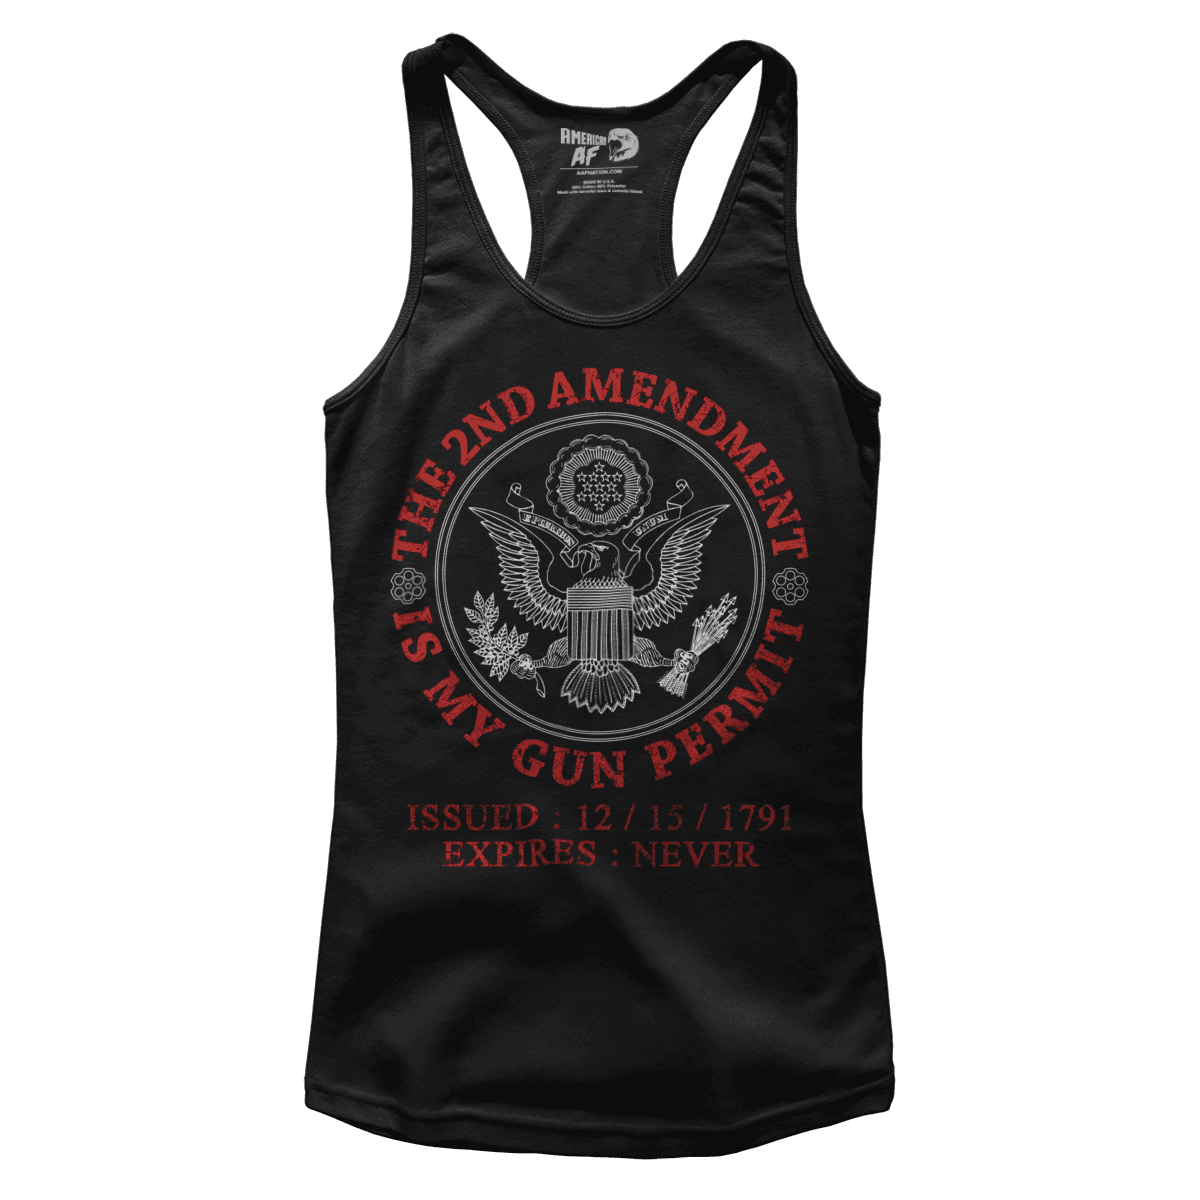 T-shirt Premium Ladies Racerback Tank / Black / XS The 2nd Amendment - Gun Permit (Ladies)